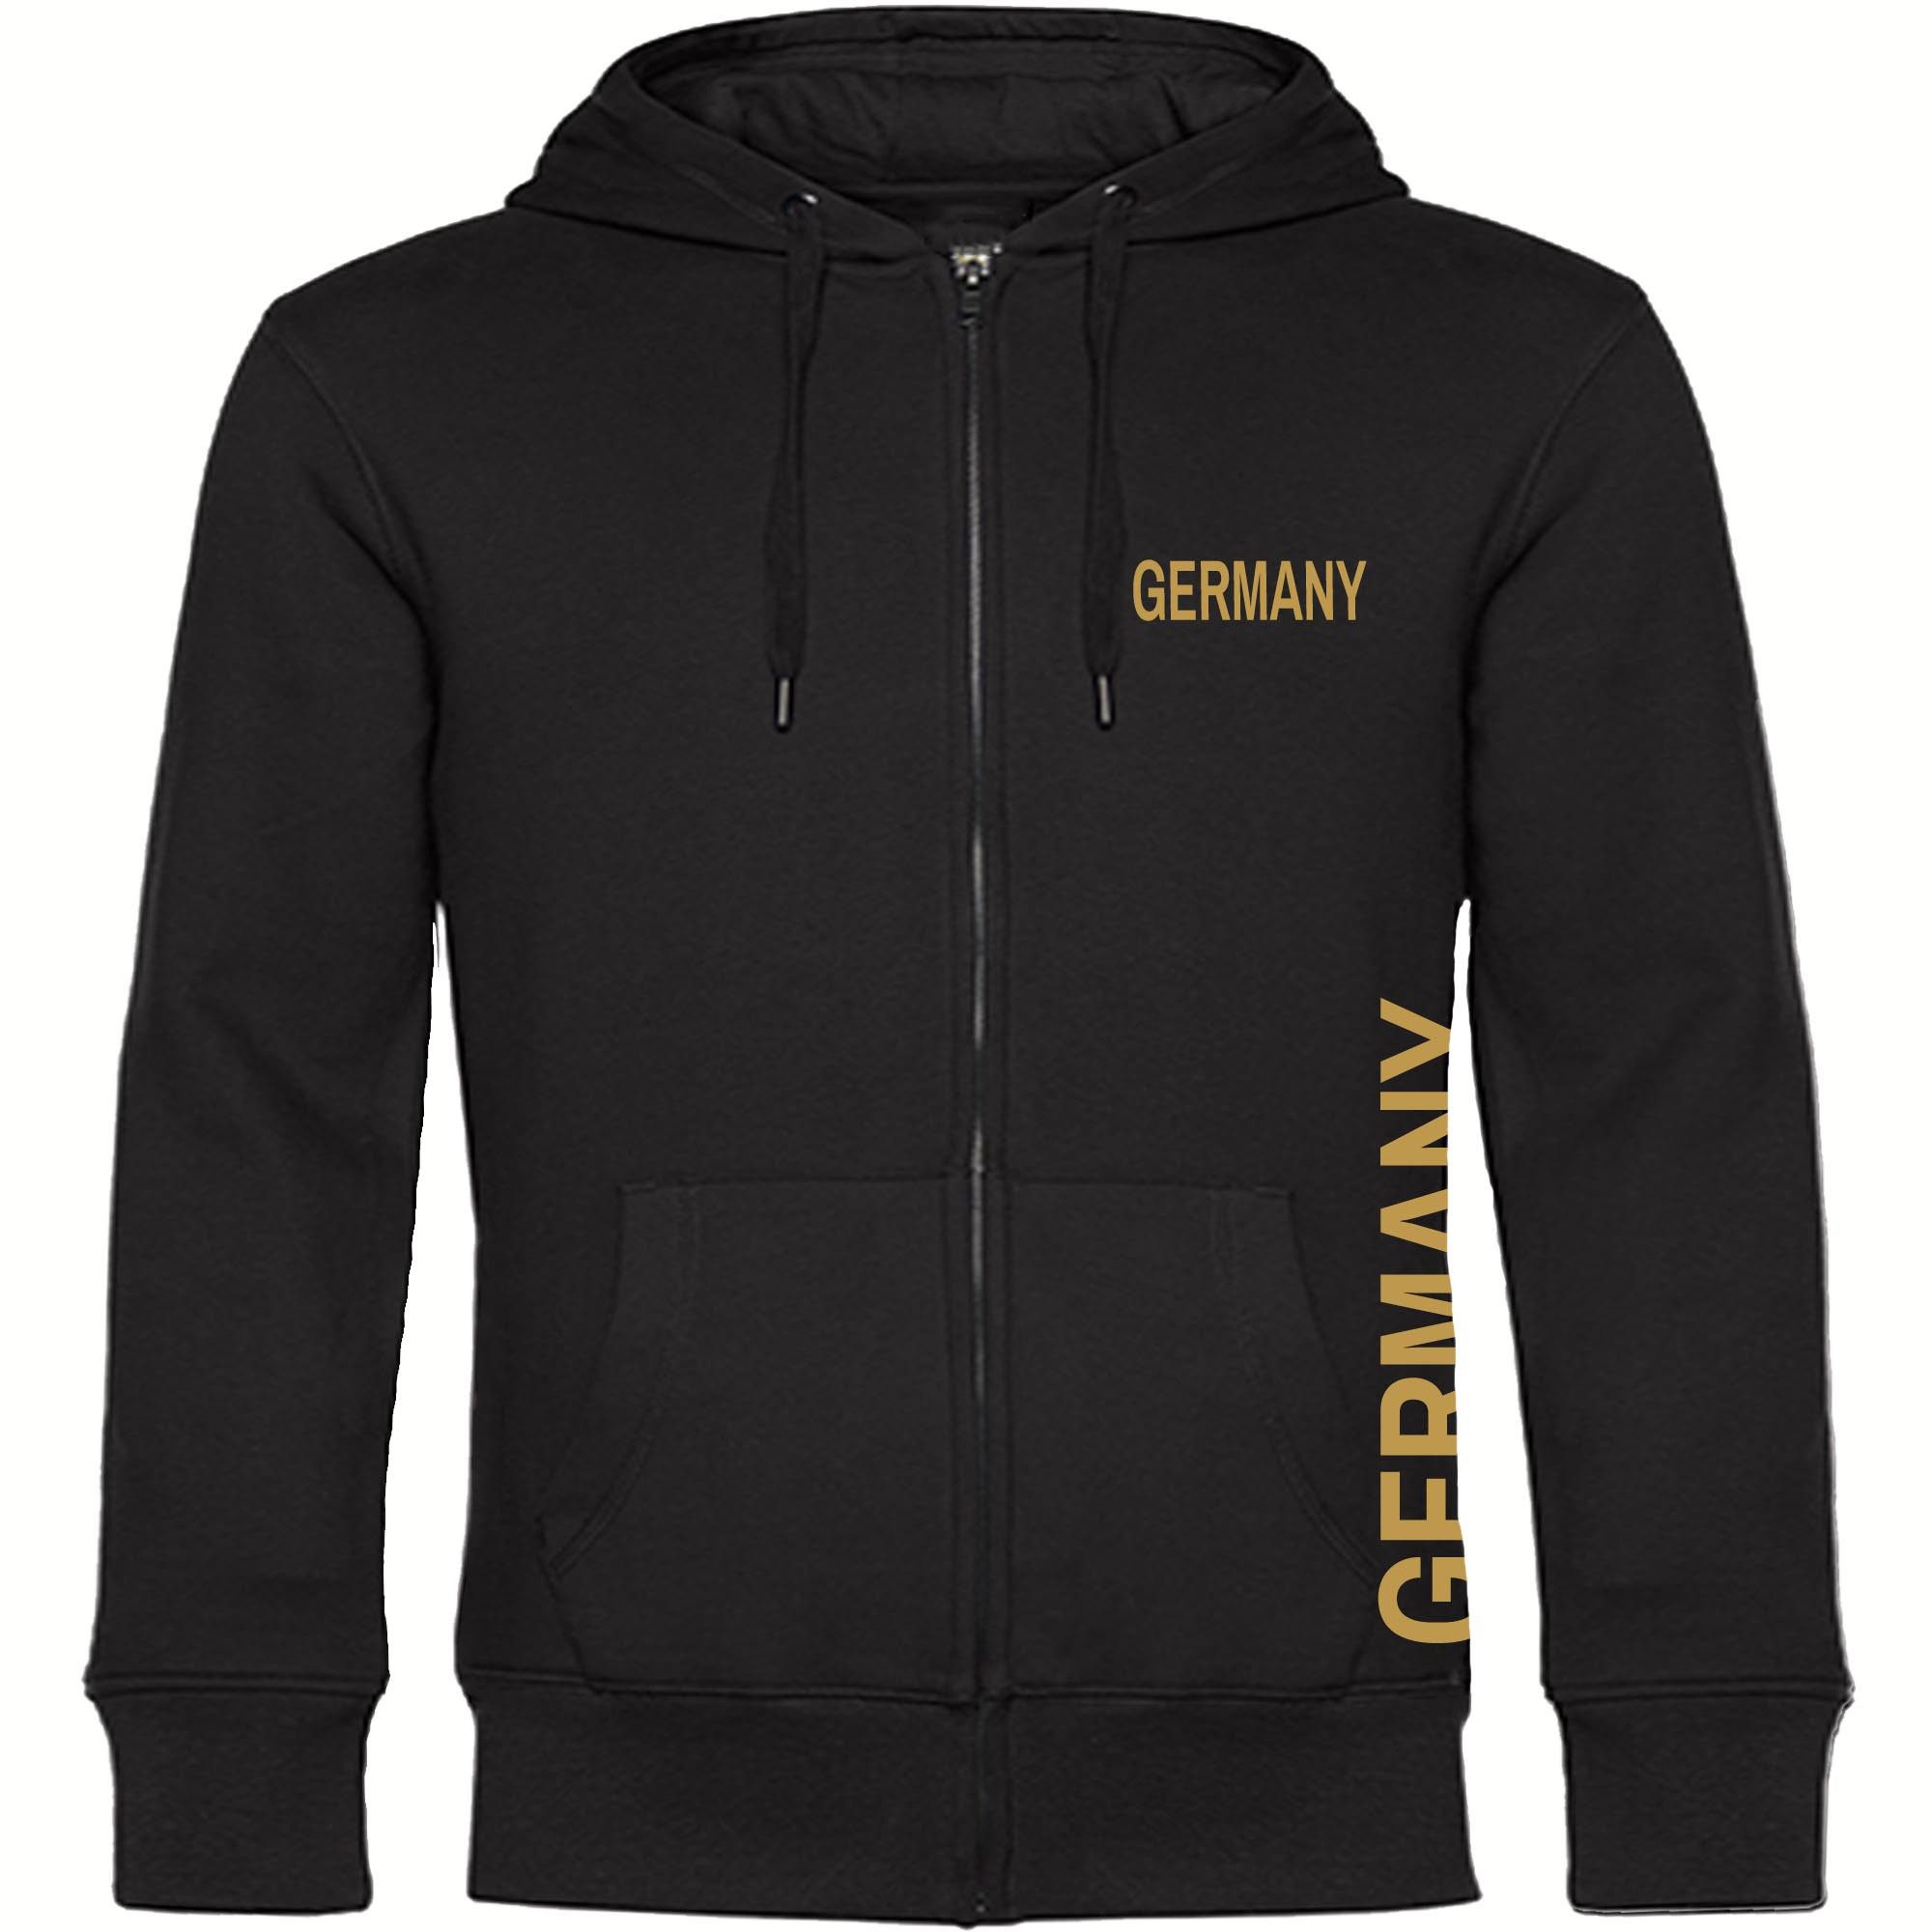 multifanshop Kapuzensweatjacke Germany - Brust & Seite Gold - Pullover